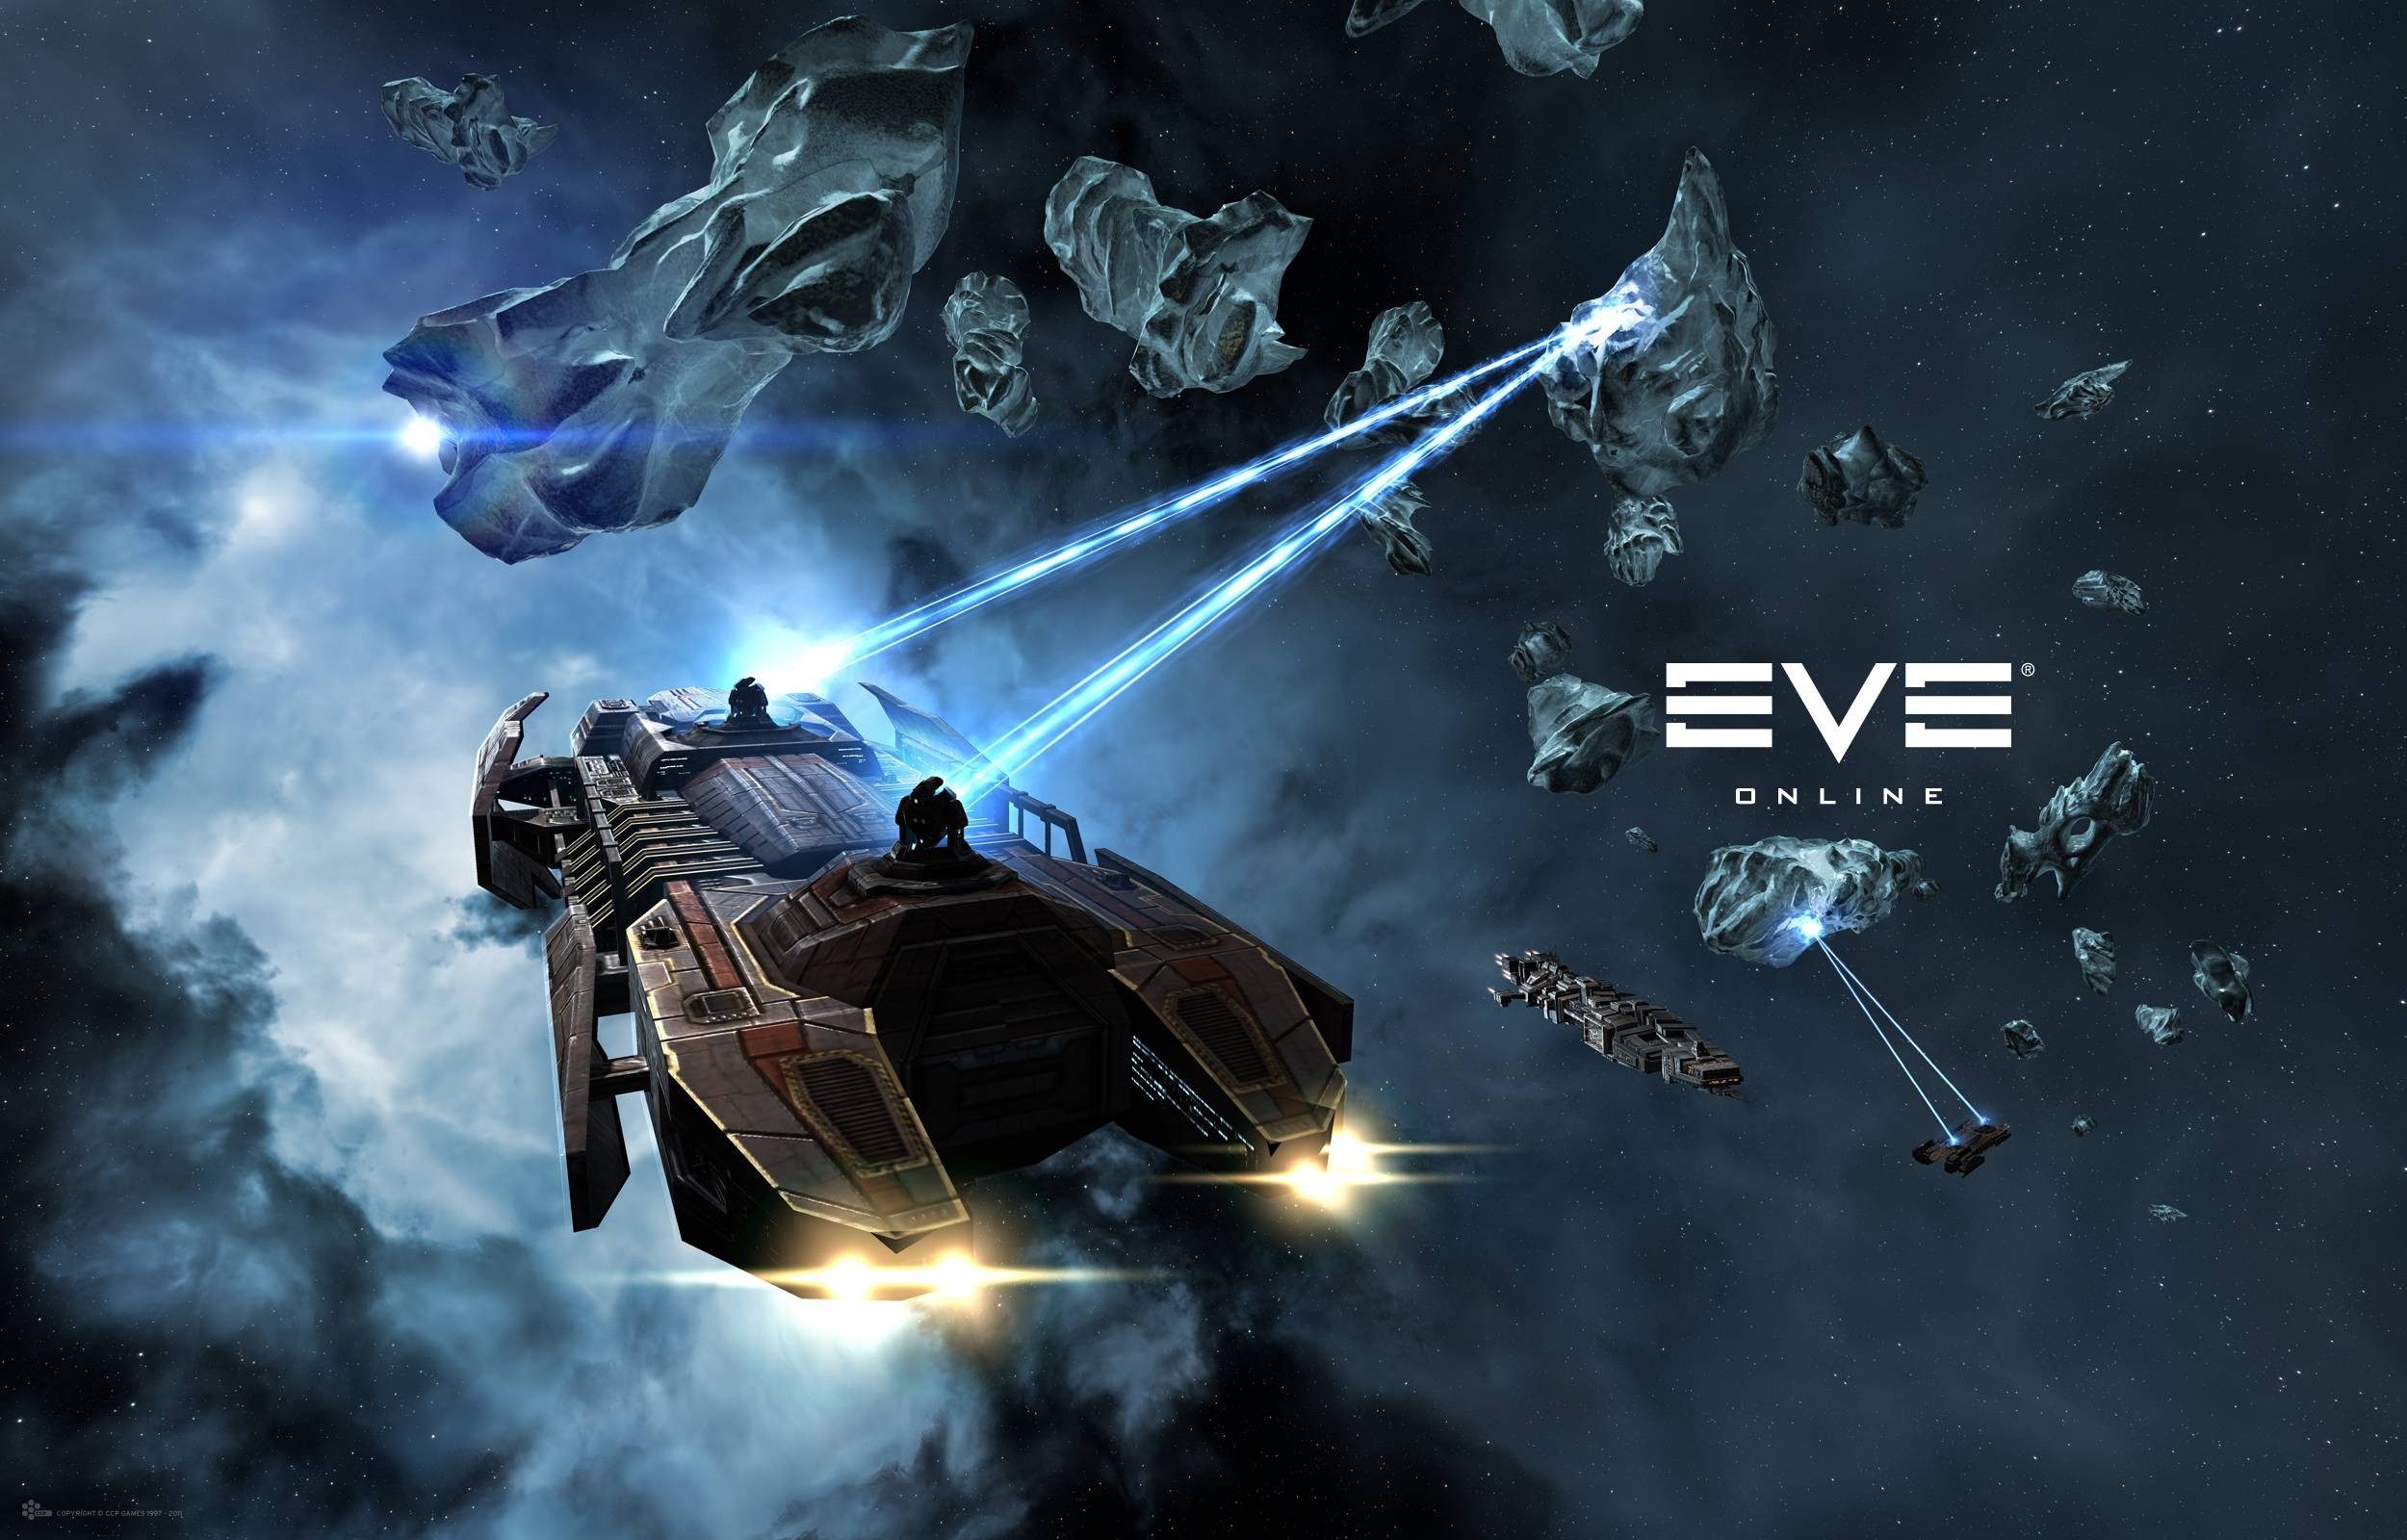  Eve Online wallpaper    Download free  amazing HD 